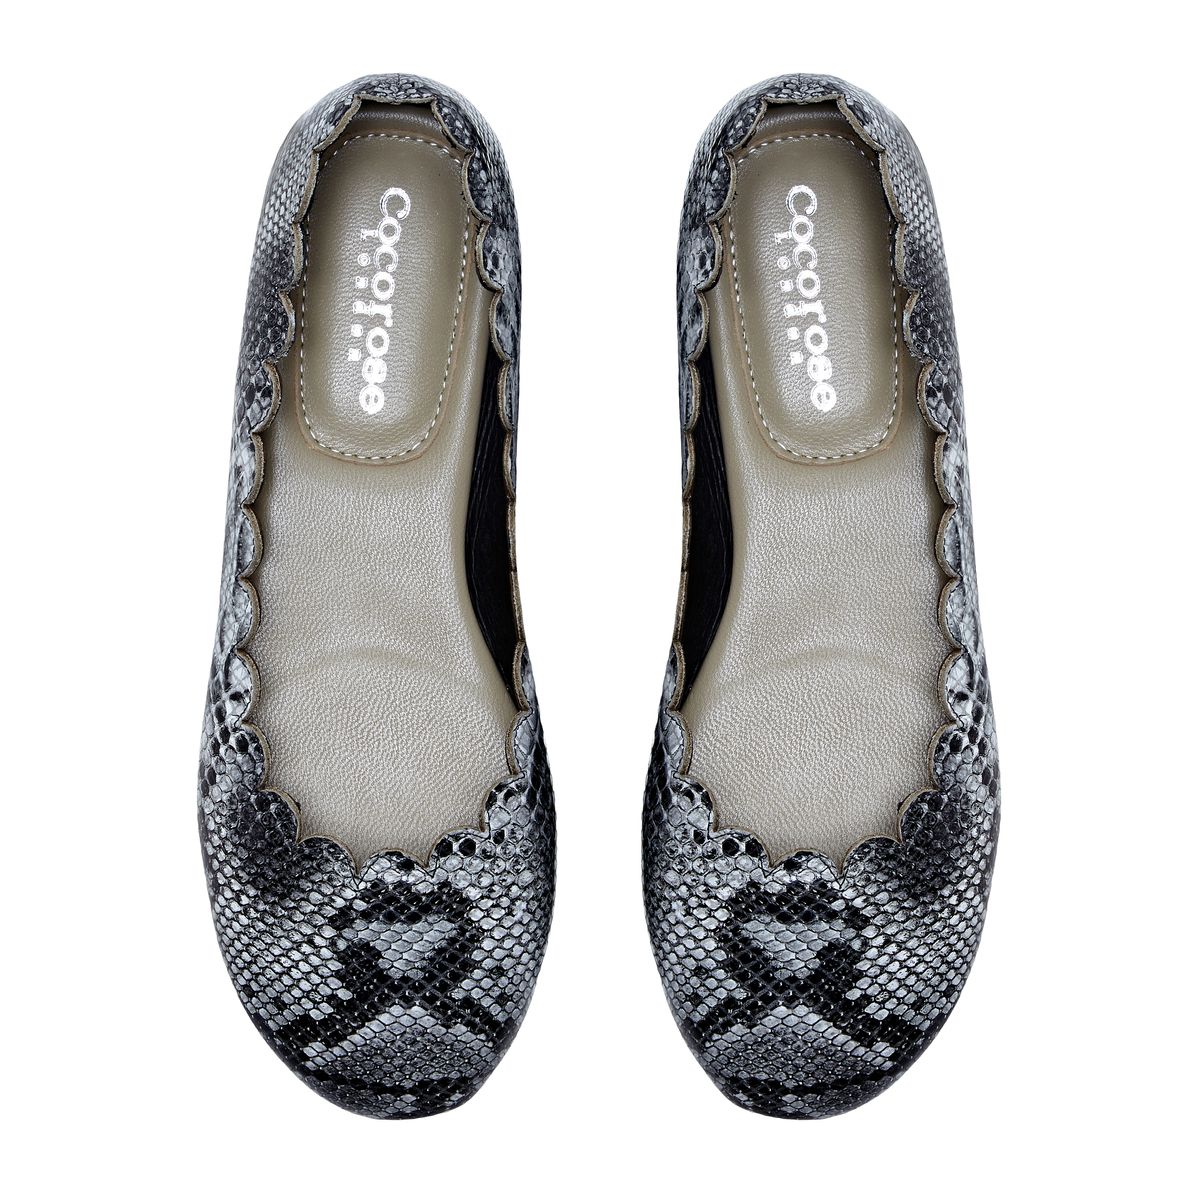 Mayfair Grey Snake Print Scalloped Leather Ballerina Shoes